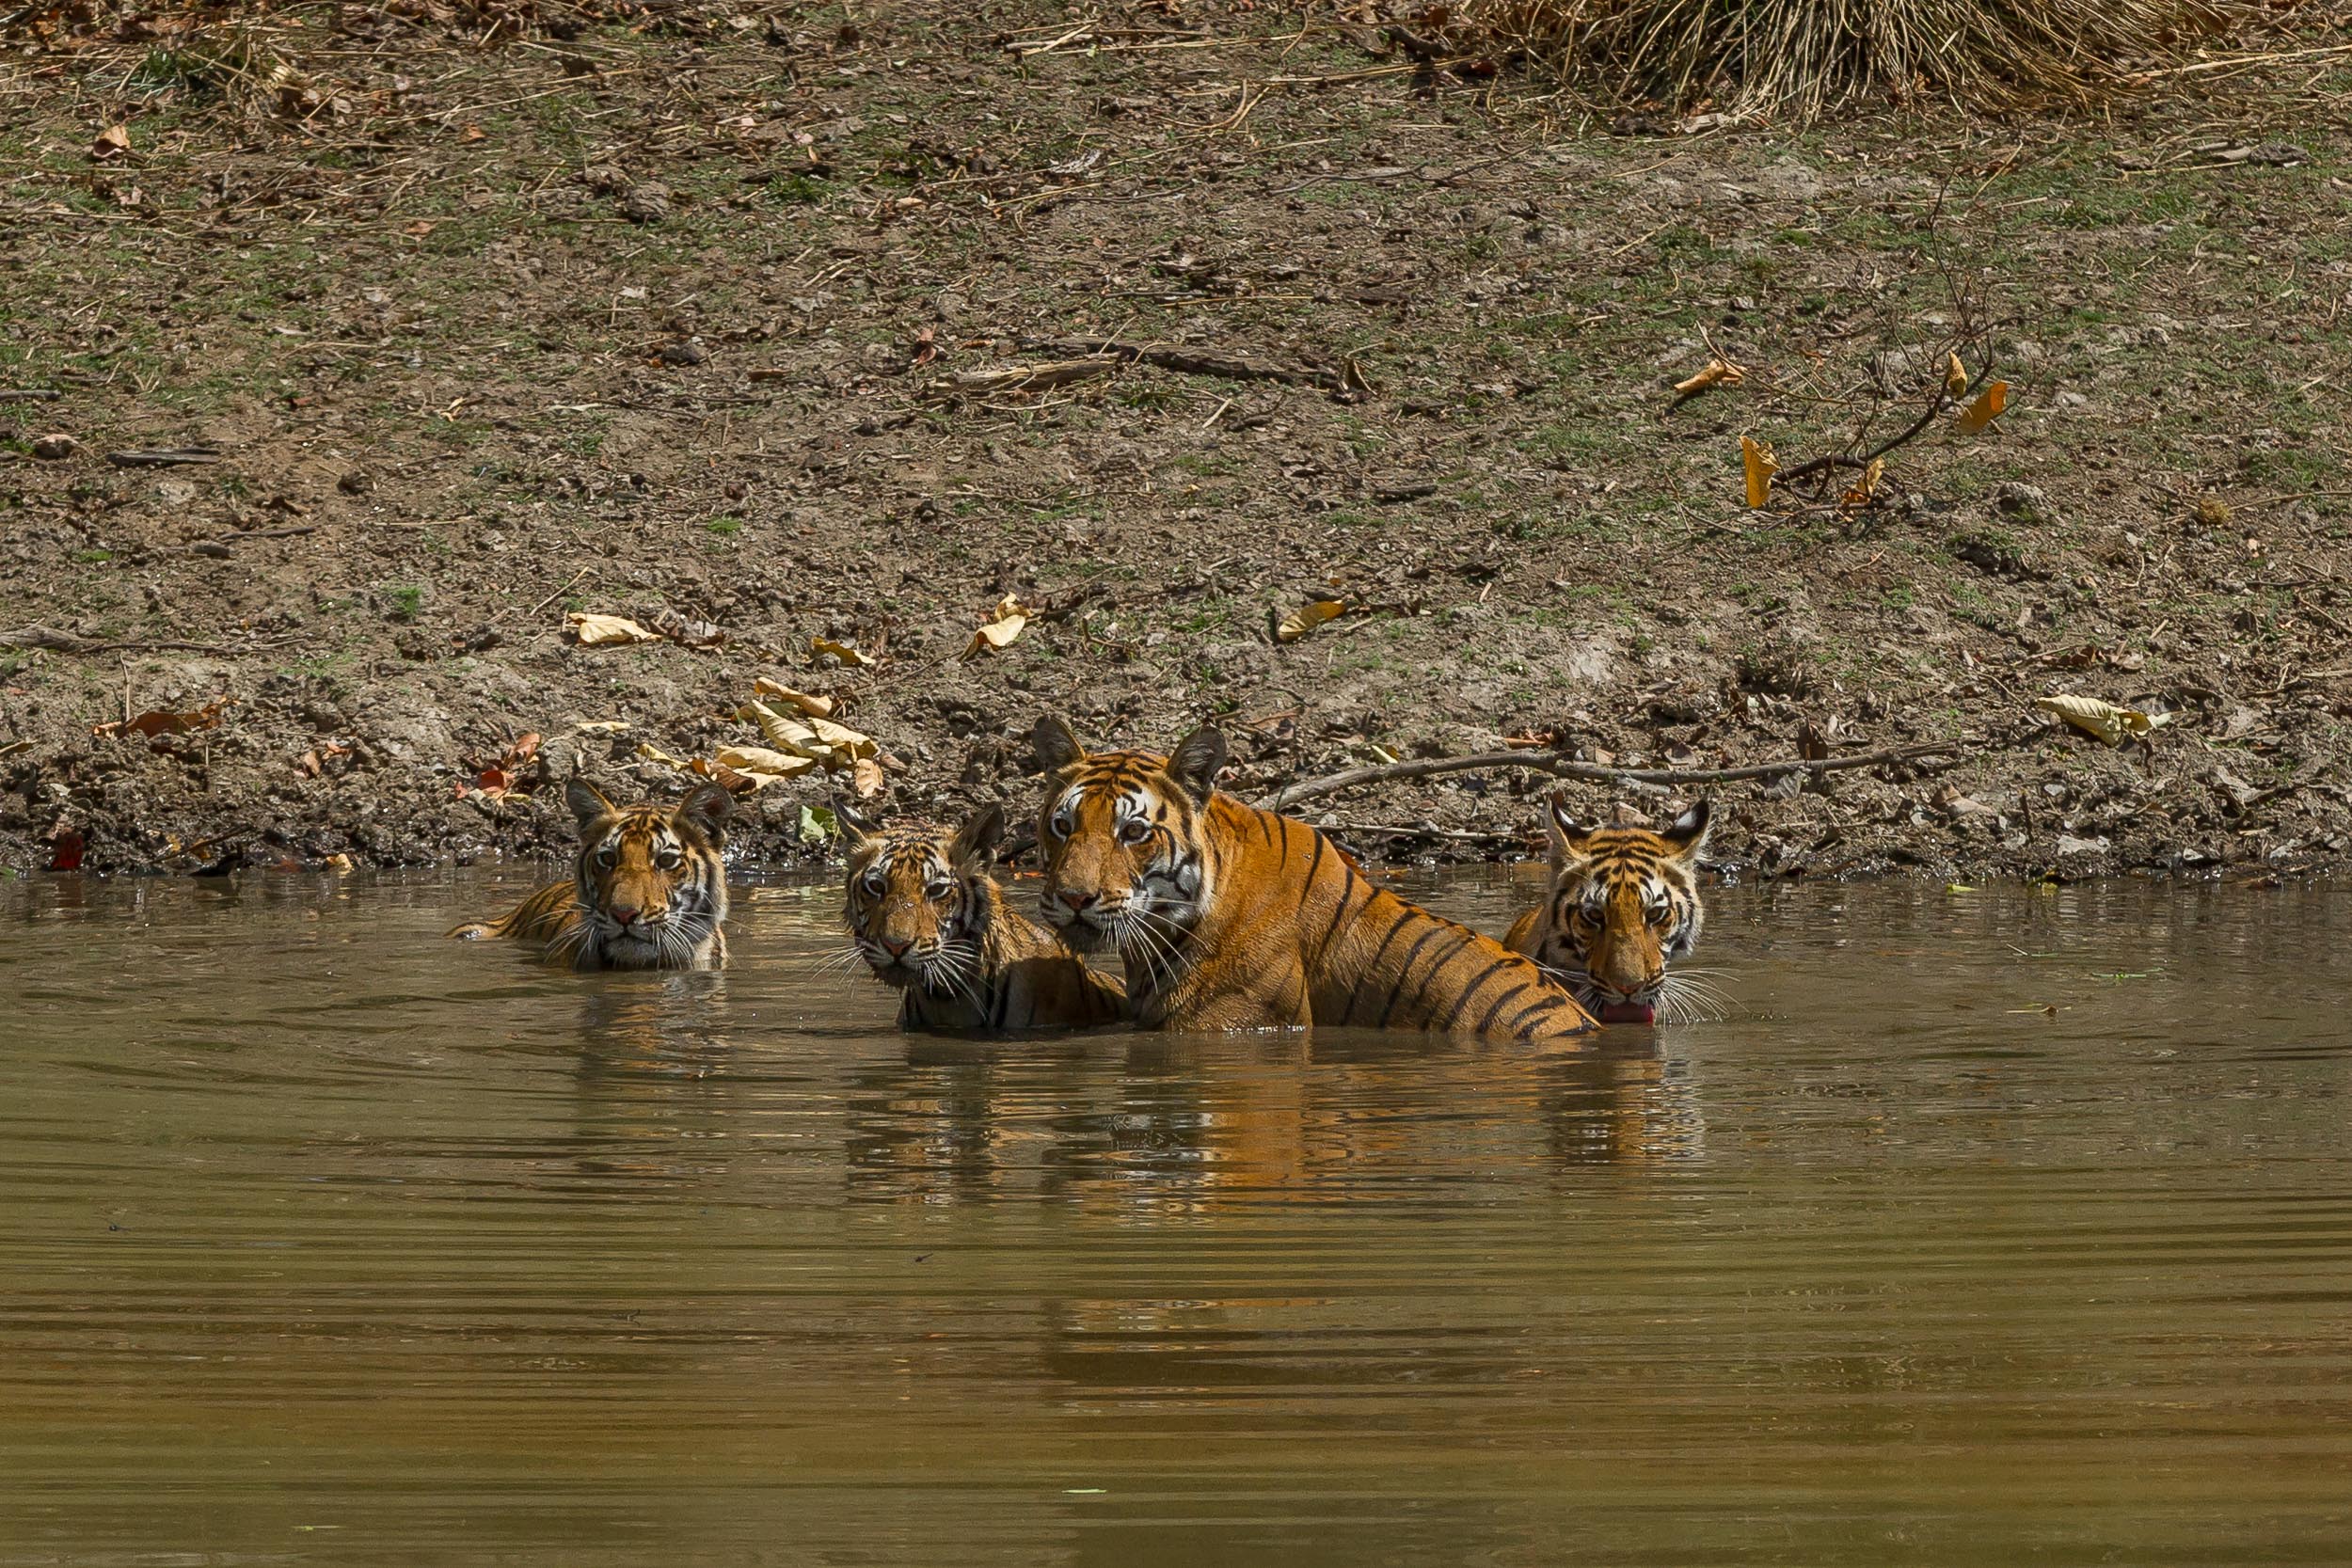 Dhawajhandi (T-27) + cubs